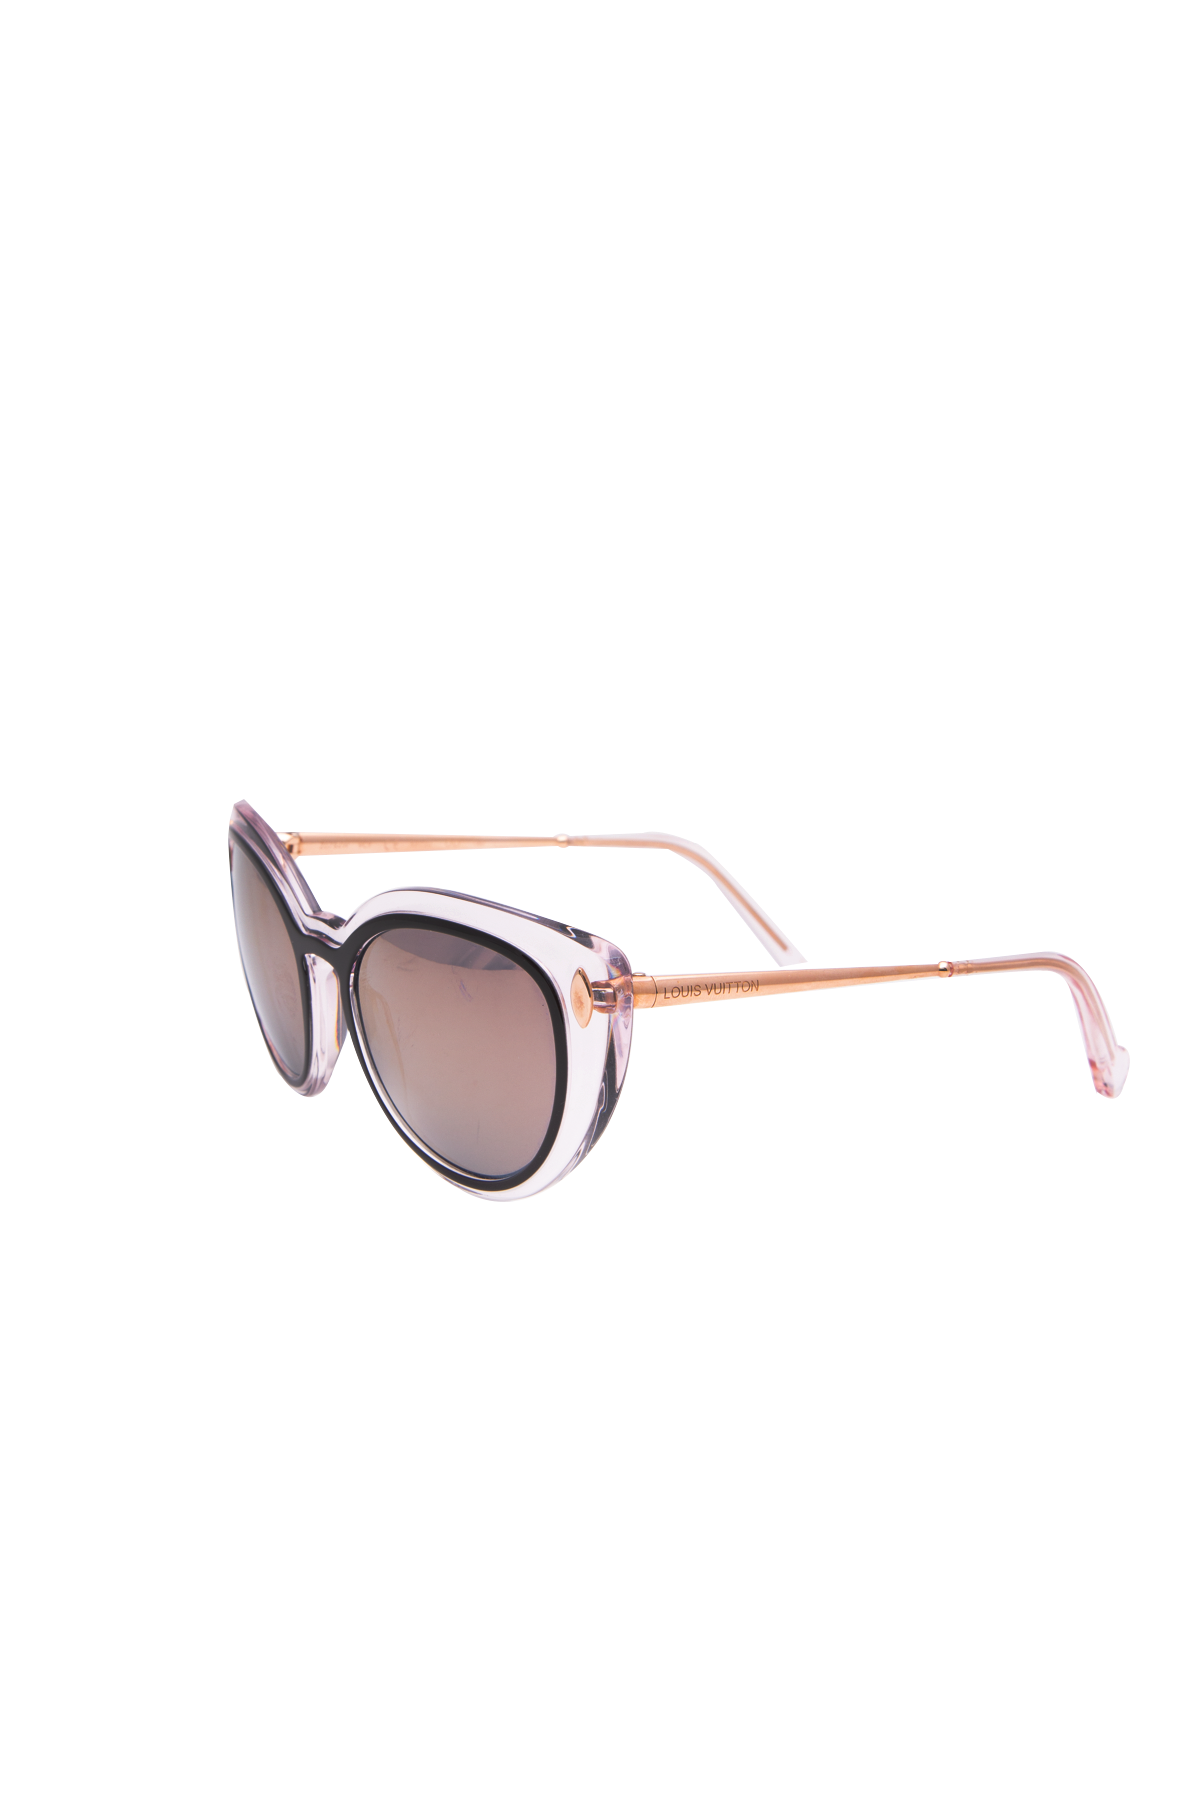 Louis Vuitton LV ESCALE GREASE SUNGLASSES  Sunglasses, Louis vuitton pink,  Dior ring